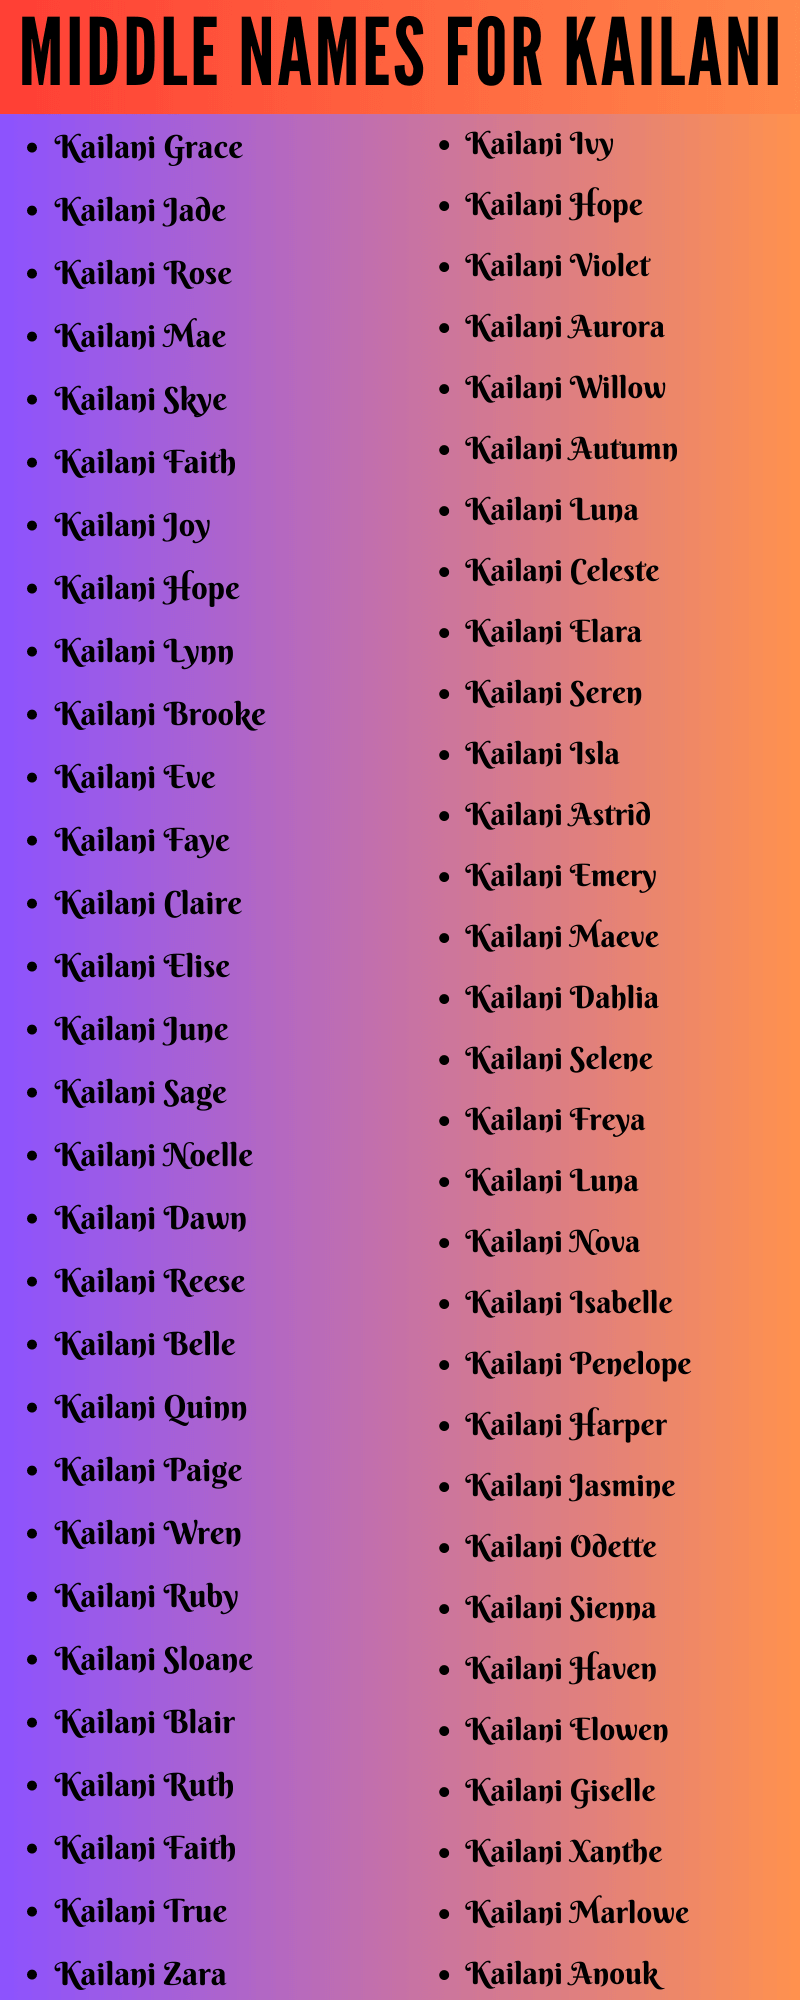 400 Unique Middle Names For Kailani